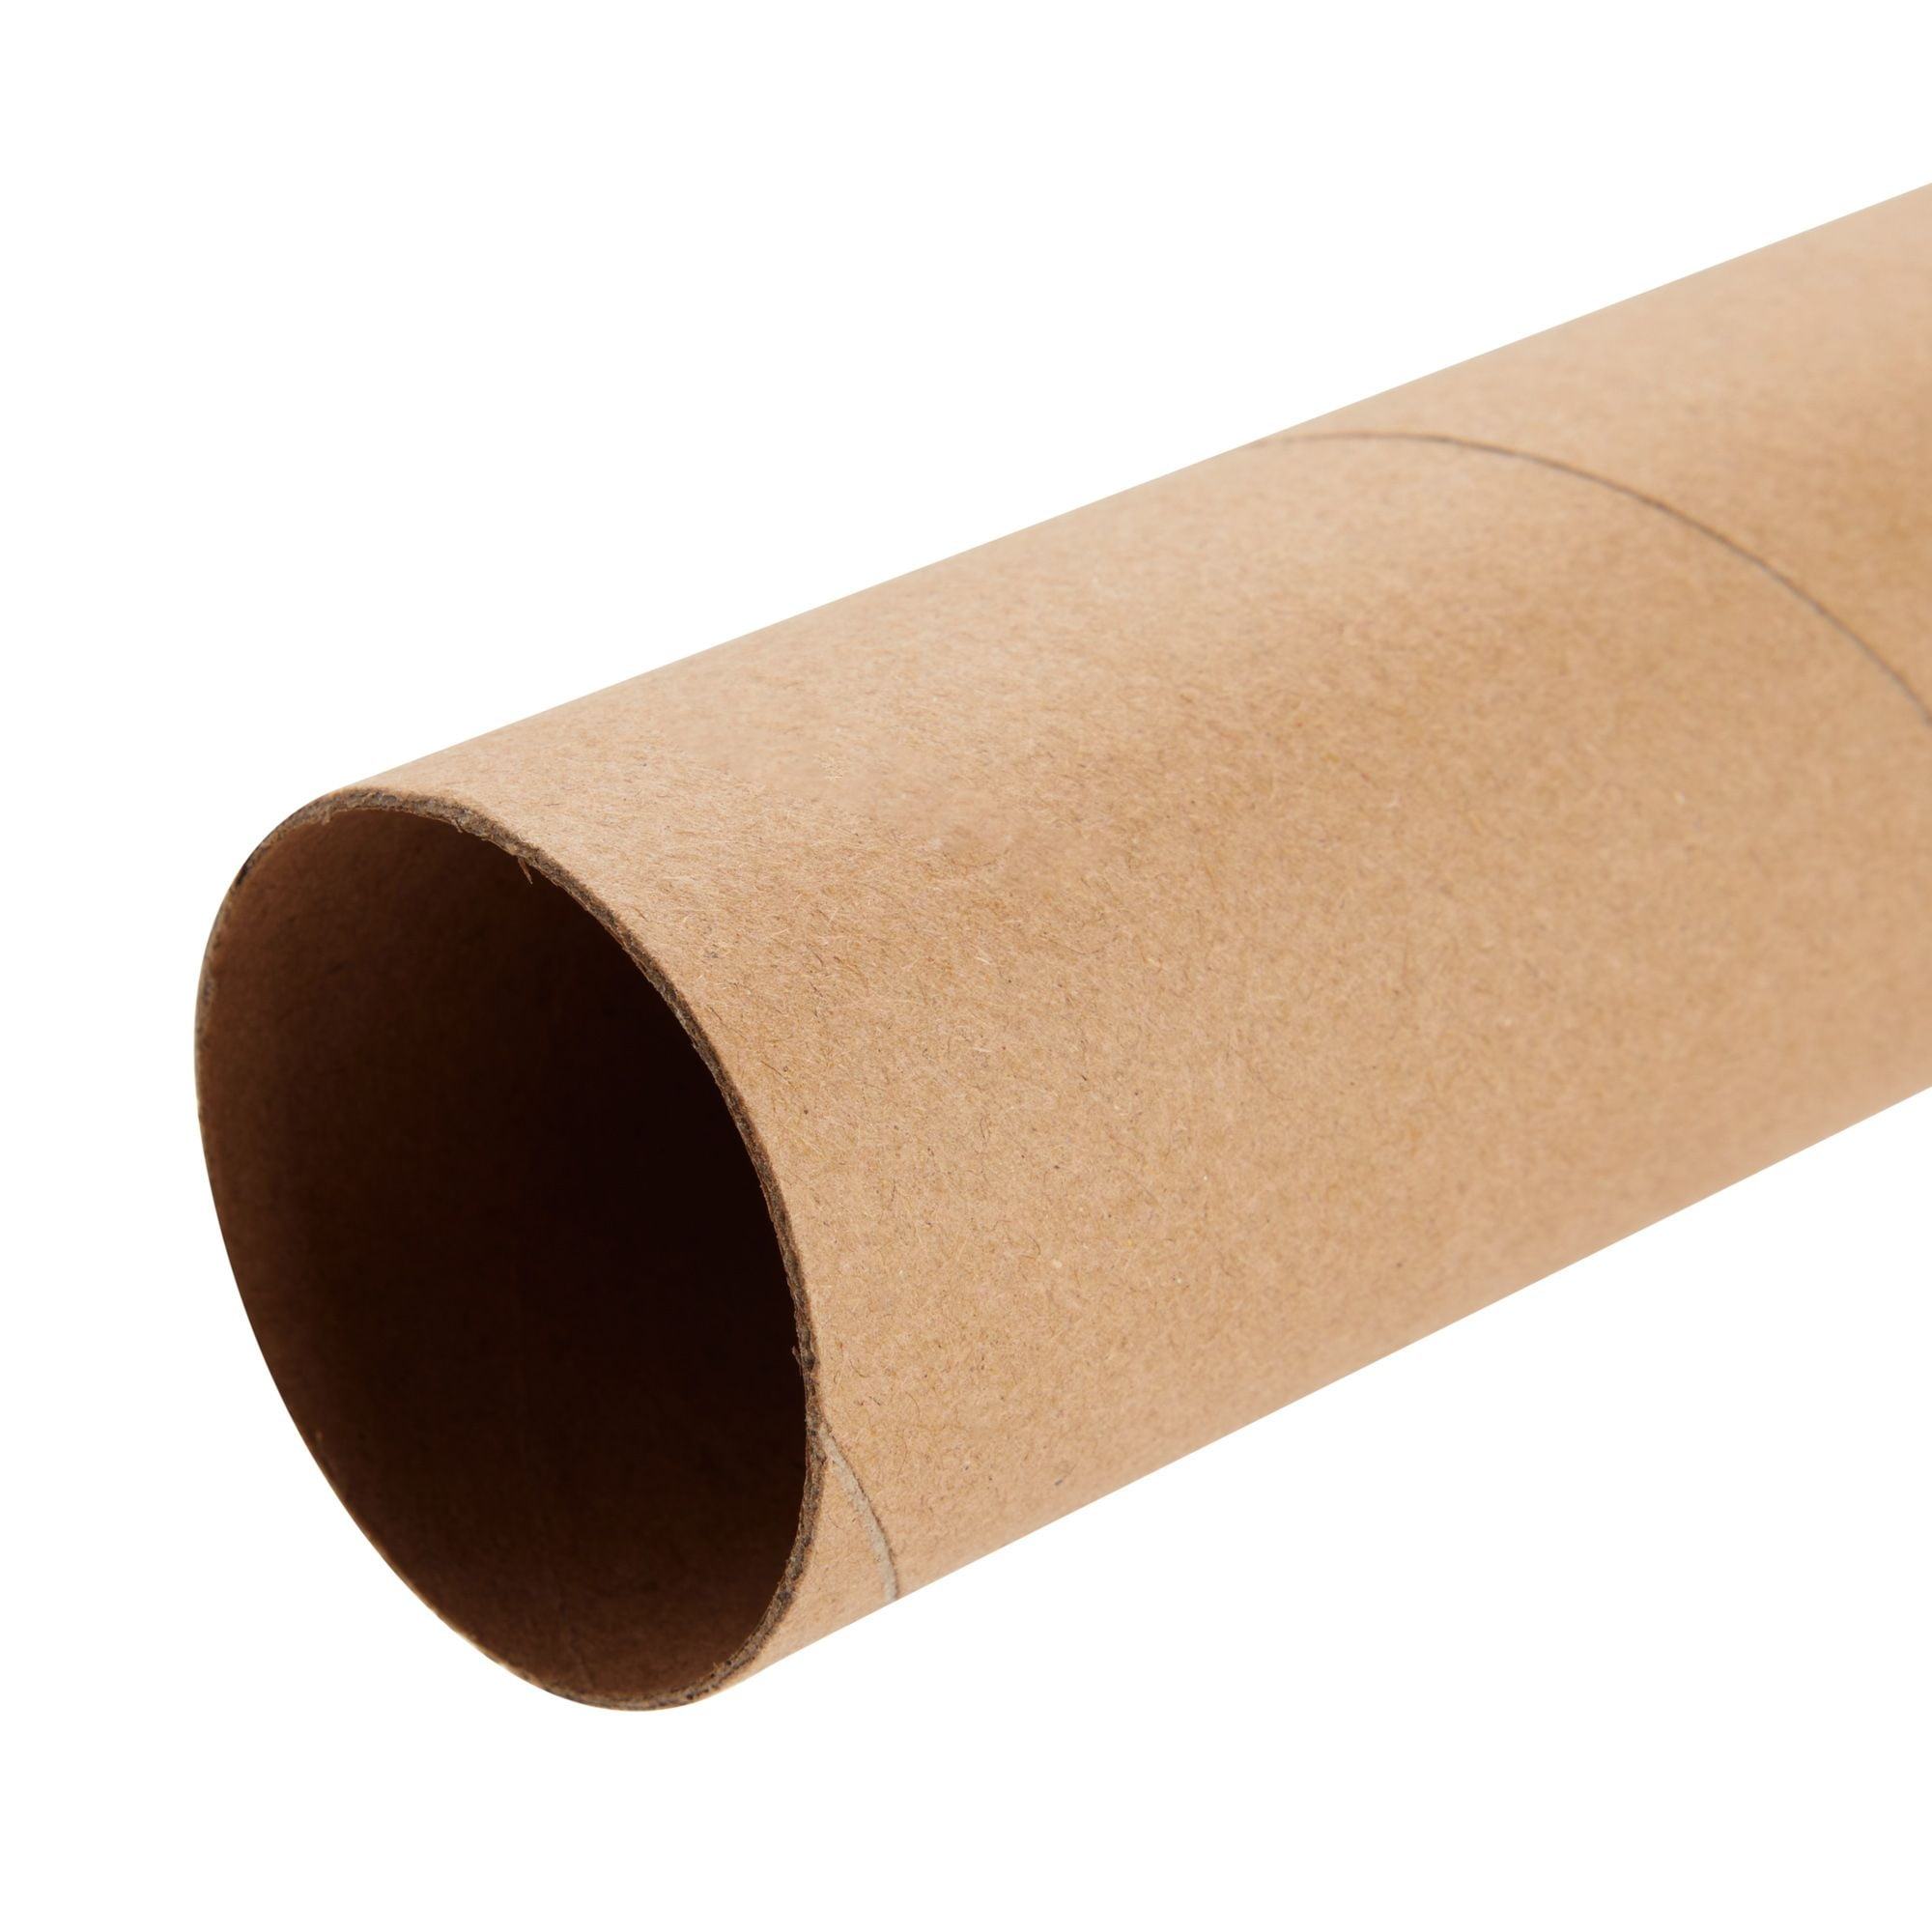 24-Pack Cardboard Tubes Craft Rolls Empty Toilet Paper Rolls for Crafts,  White, PACK - Kroger